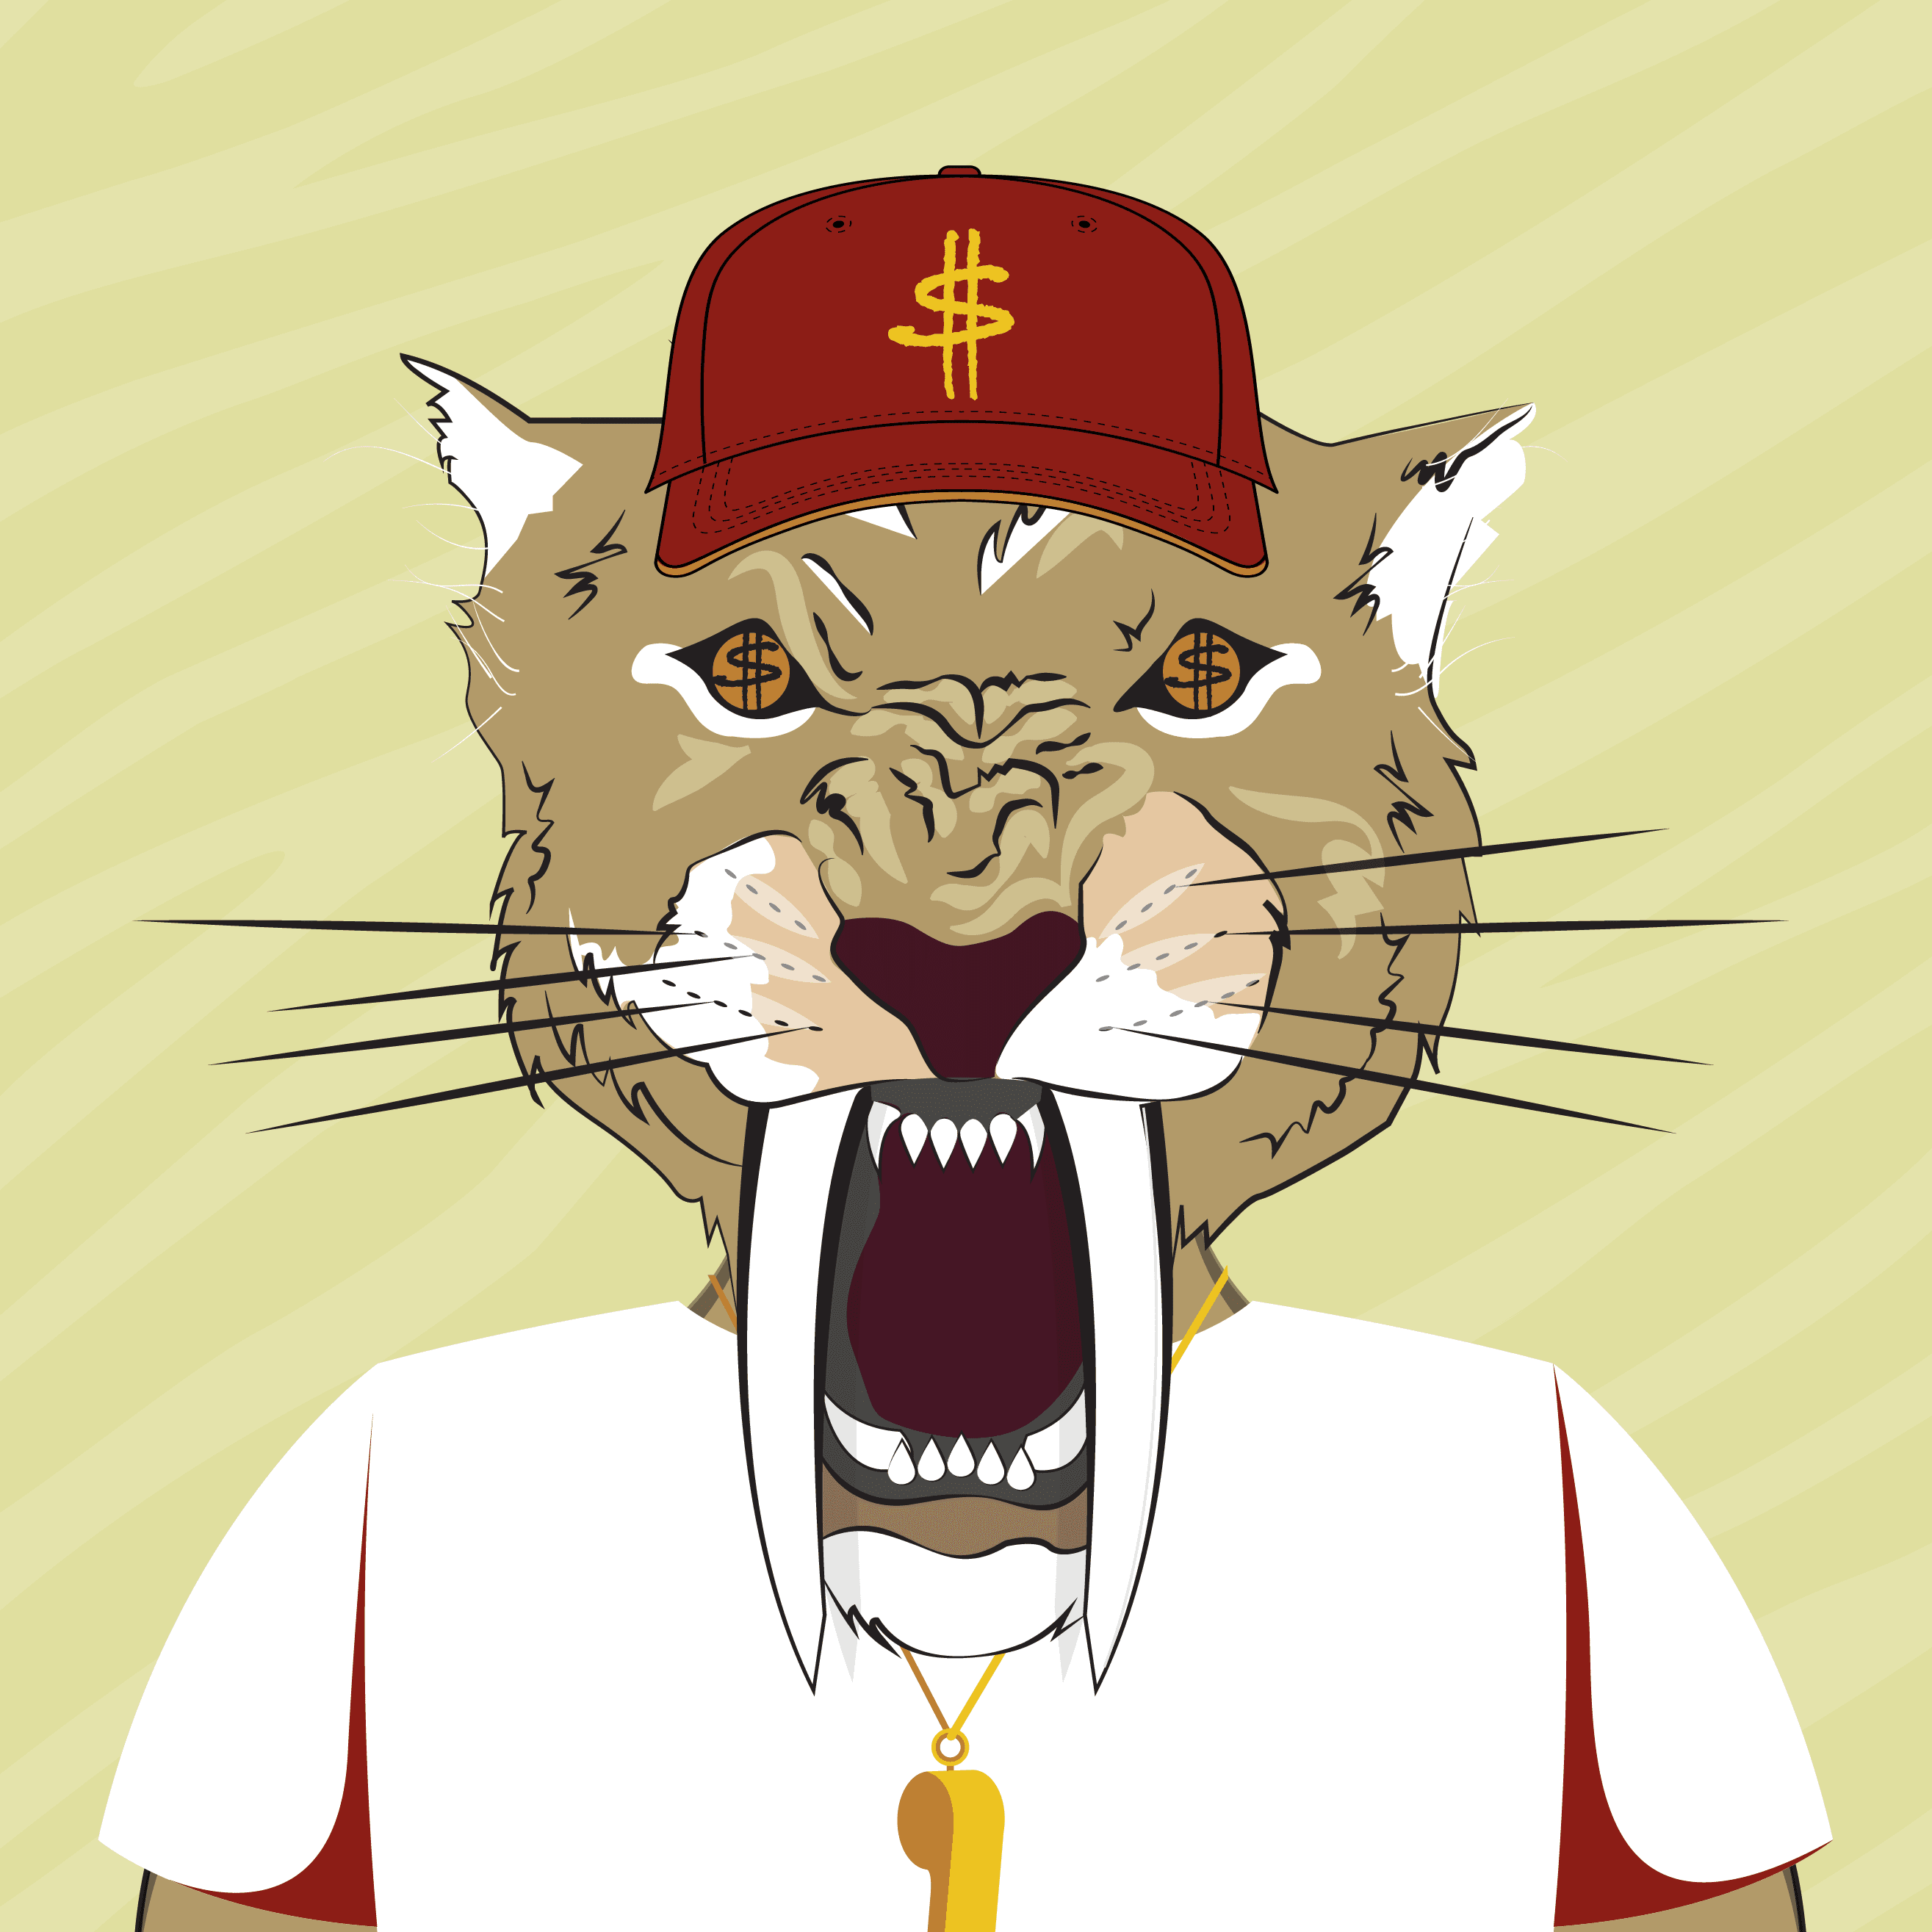 Saber-tooth cat #01